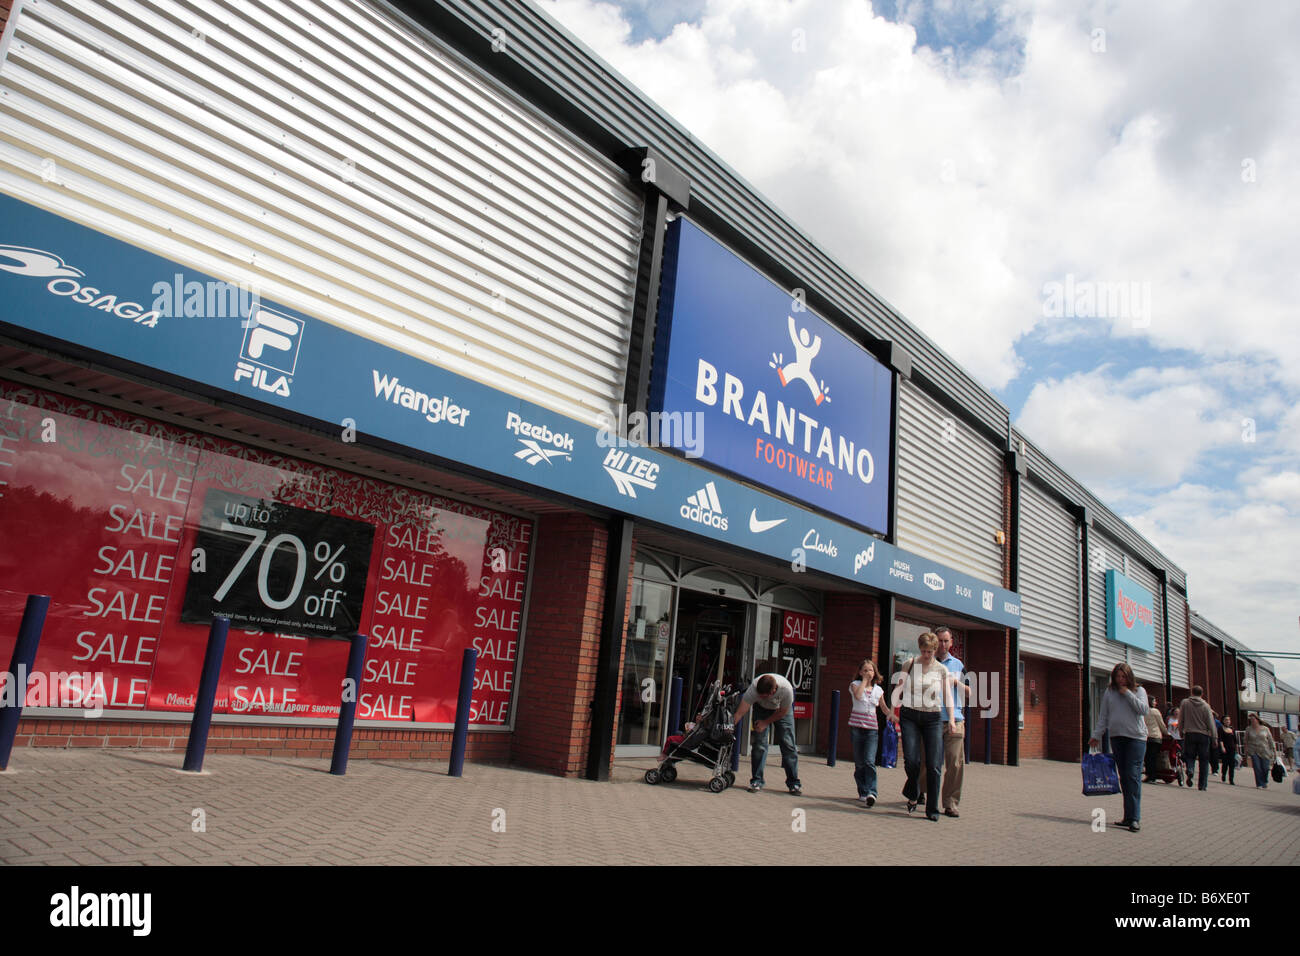 Brantano footwear store, Festival Retail Park, Stoke-on-Trent Stock Photo -  Alamy